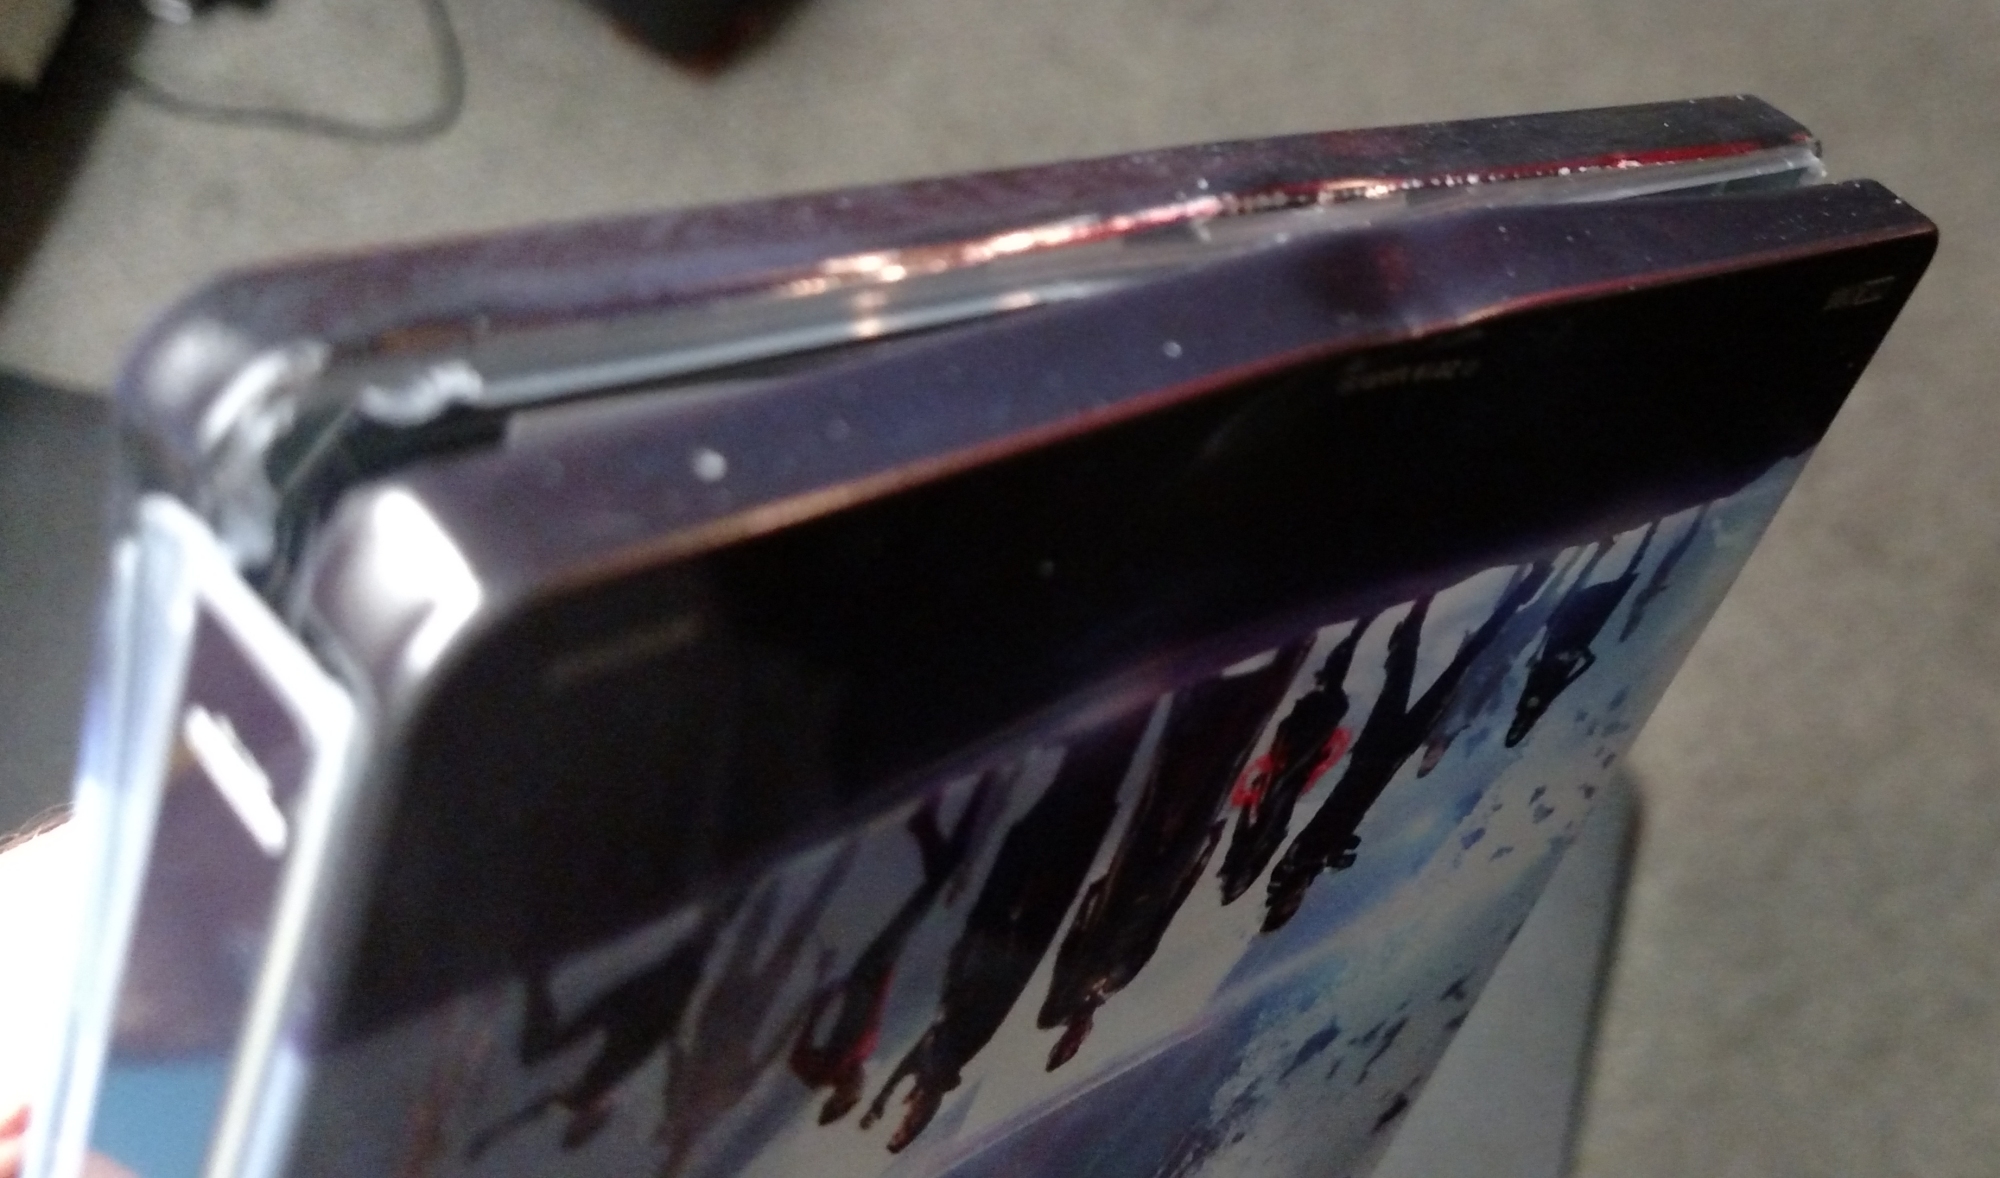 SteelBook Bottom Damage